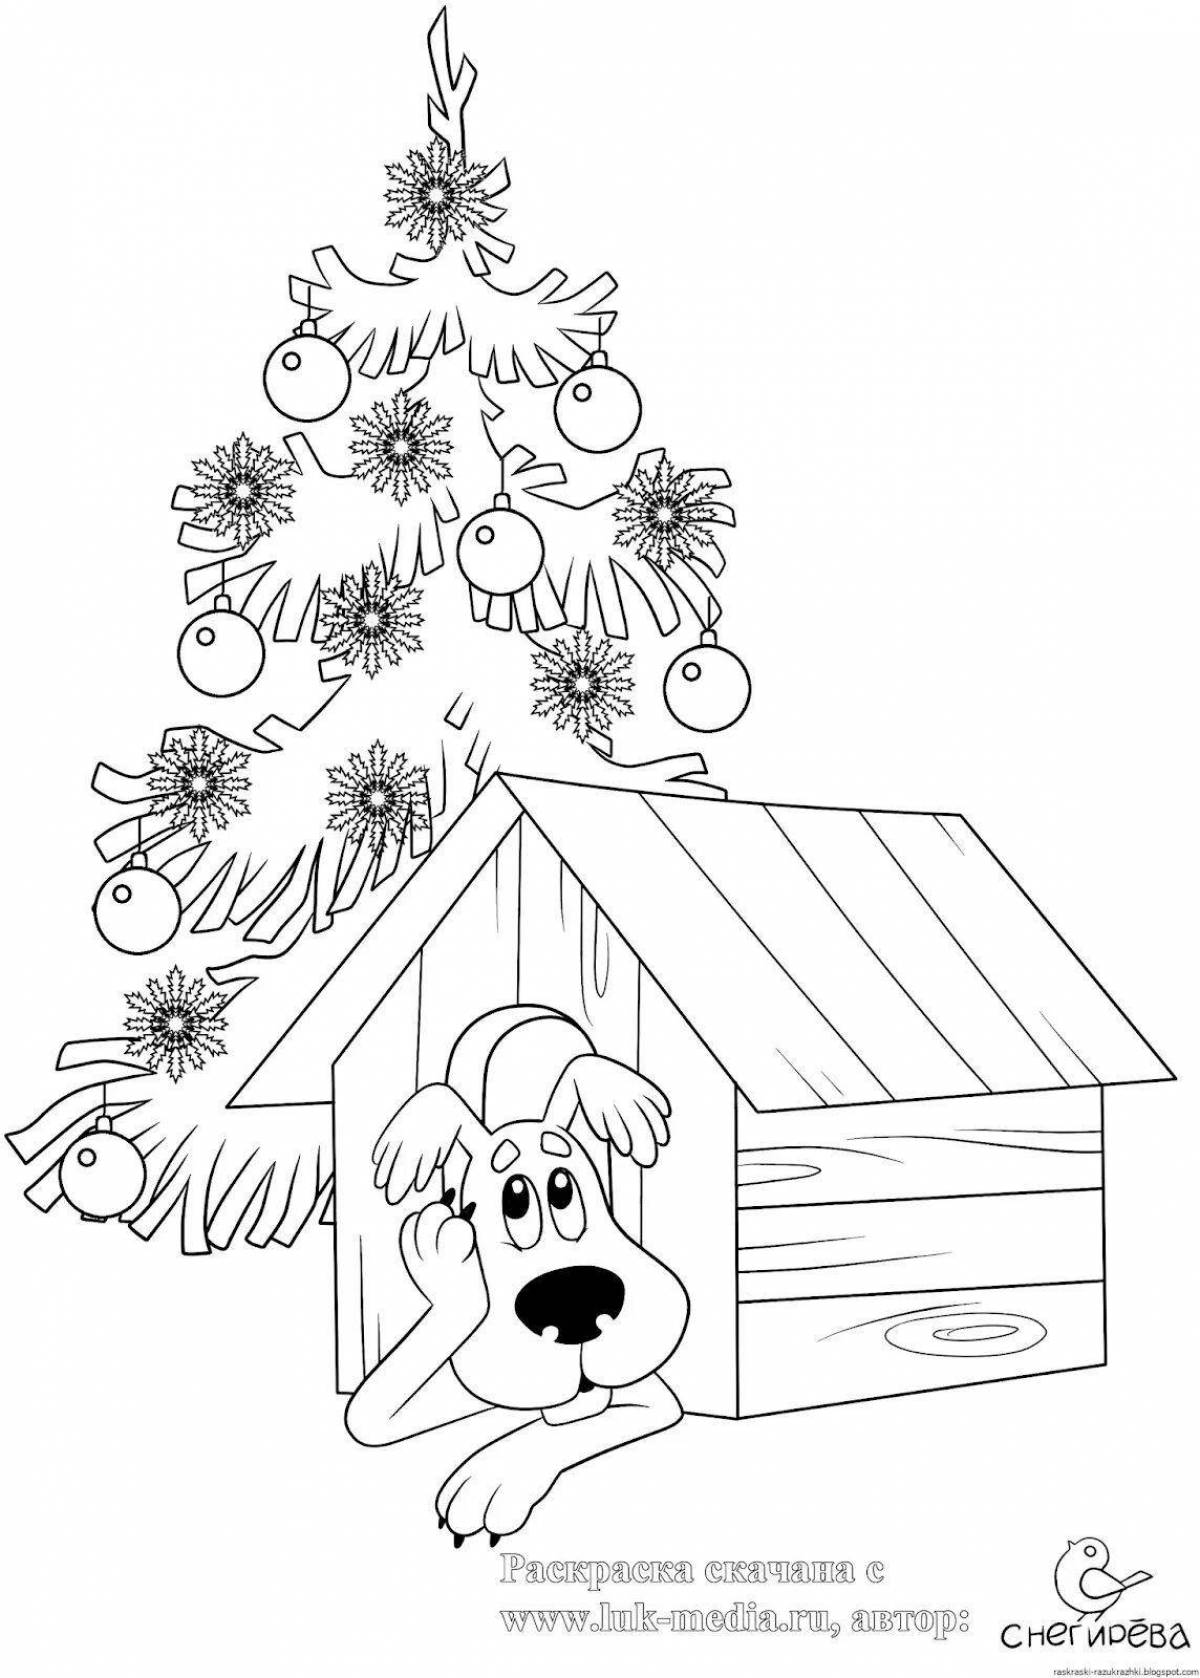 Fun dog Christmas coloring book